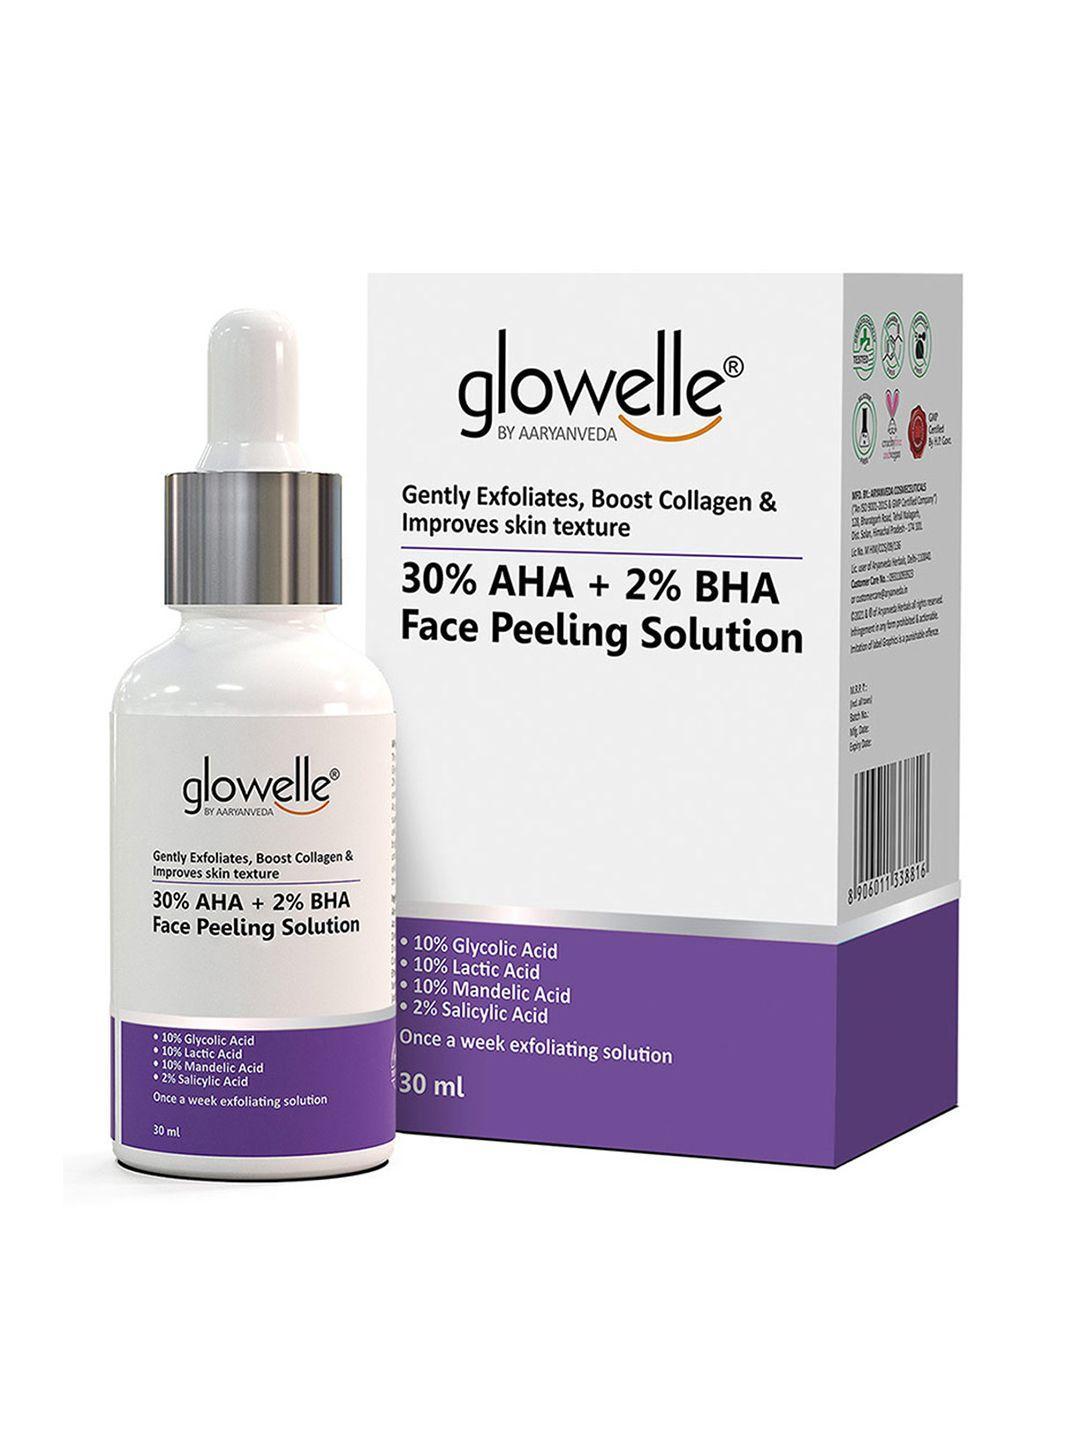 aryanveda glowelle 30% aha & 2% bha face peeling solution for mild exfoliation - 30 ml